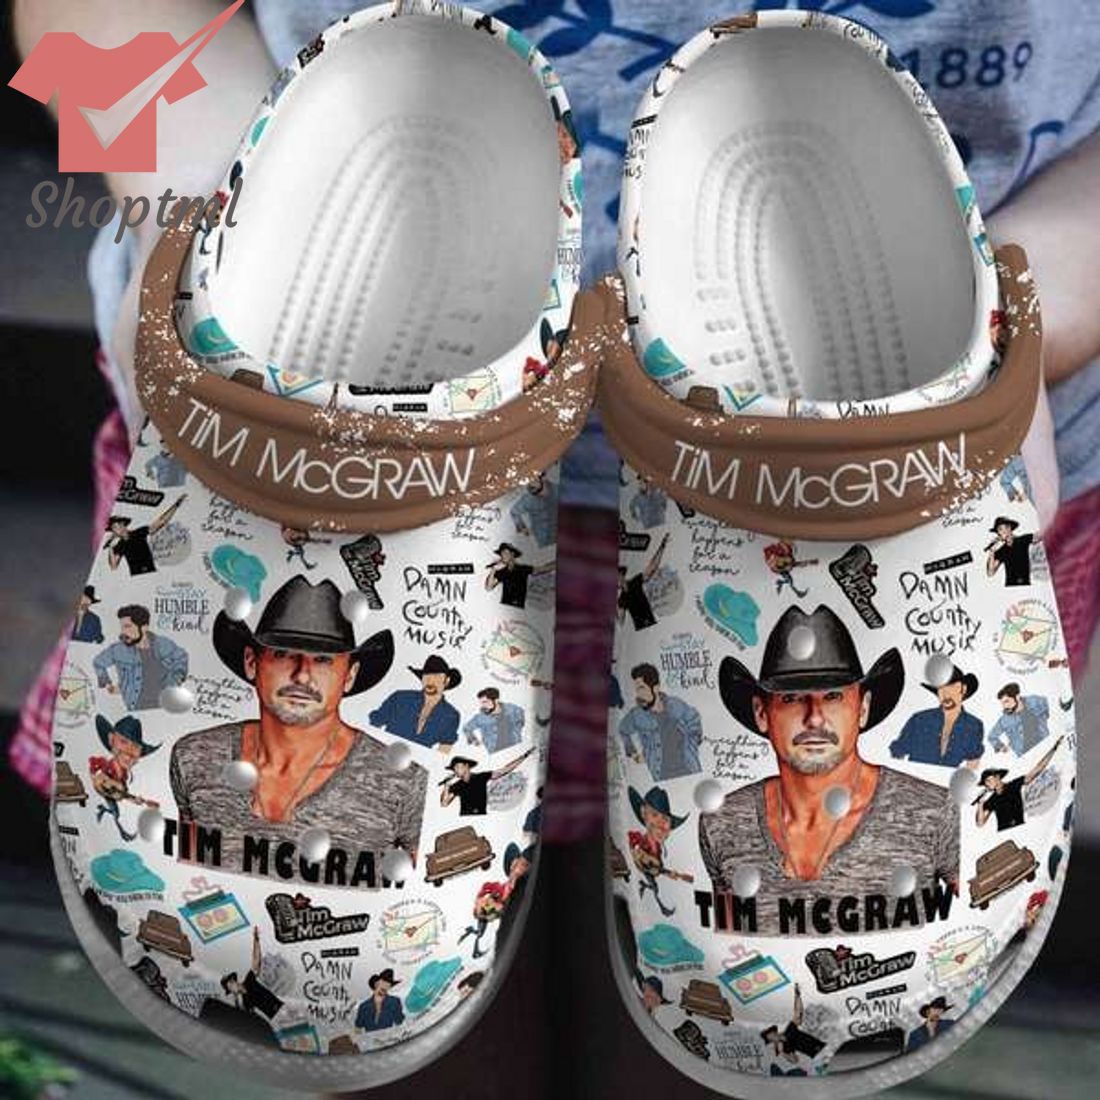 Tim McGraw Damn Country Music Crocs Clog Shoes